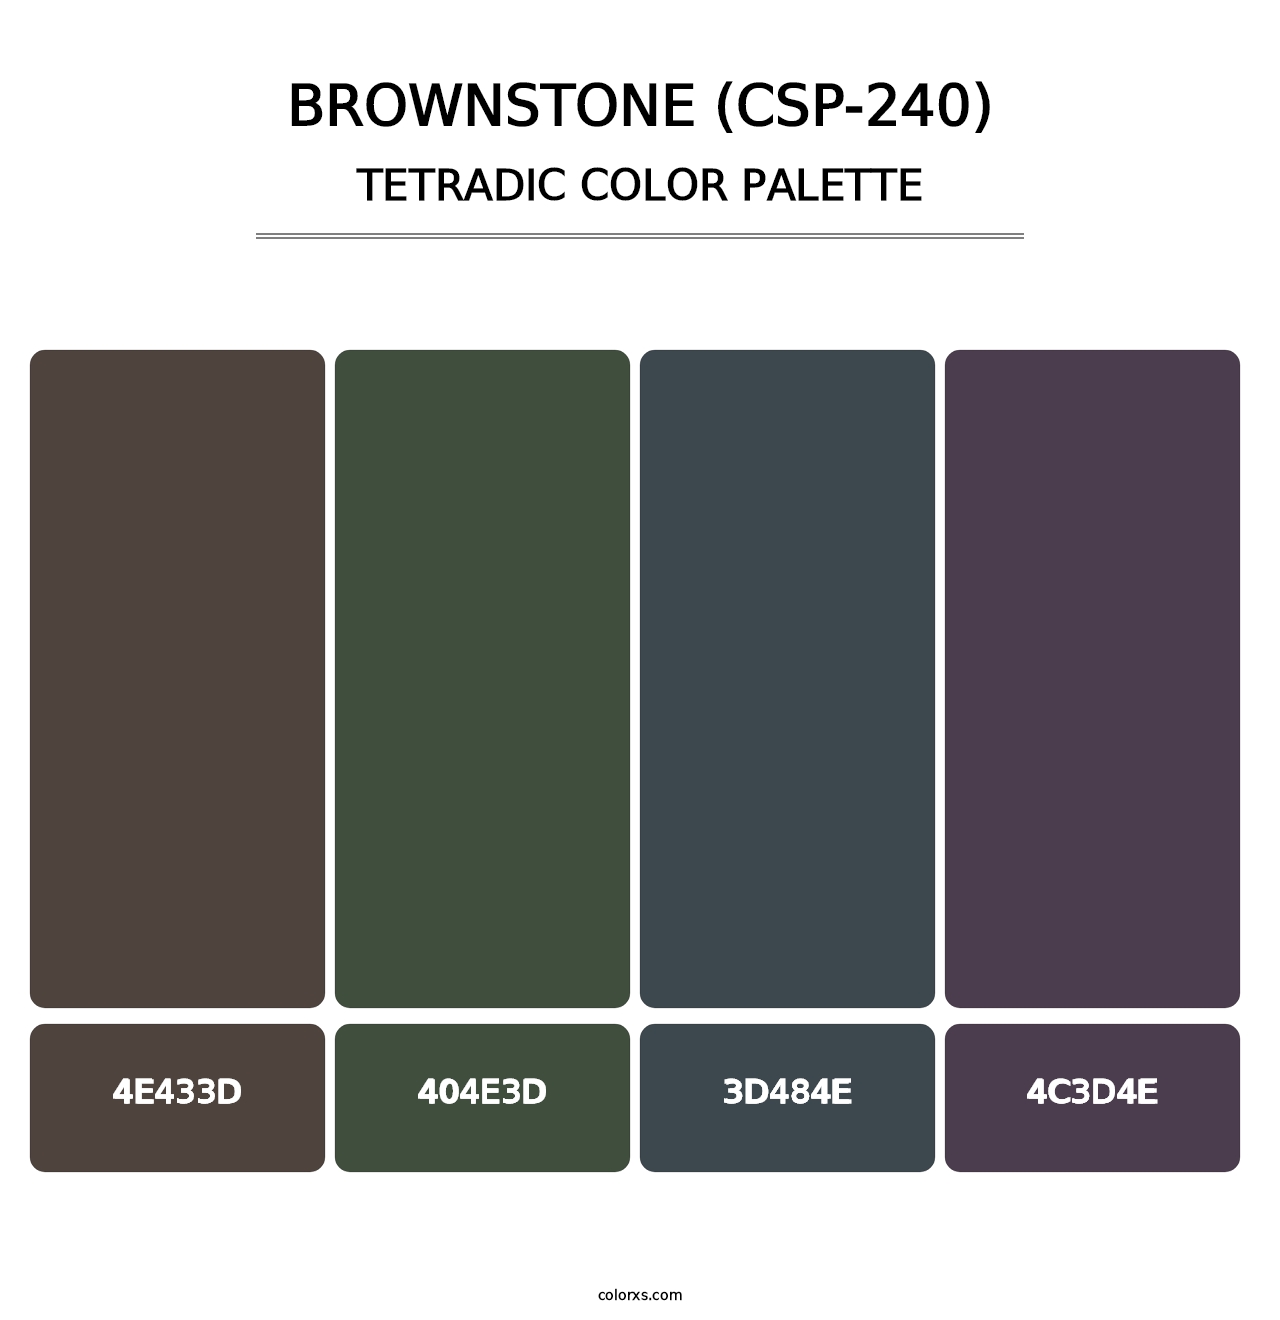 Brownstone (CSP-240) - Tetradic Color Palette